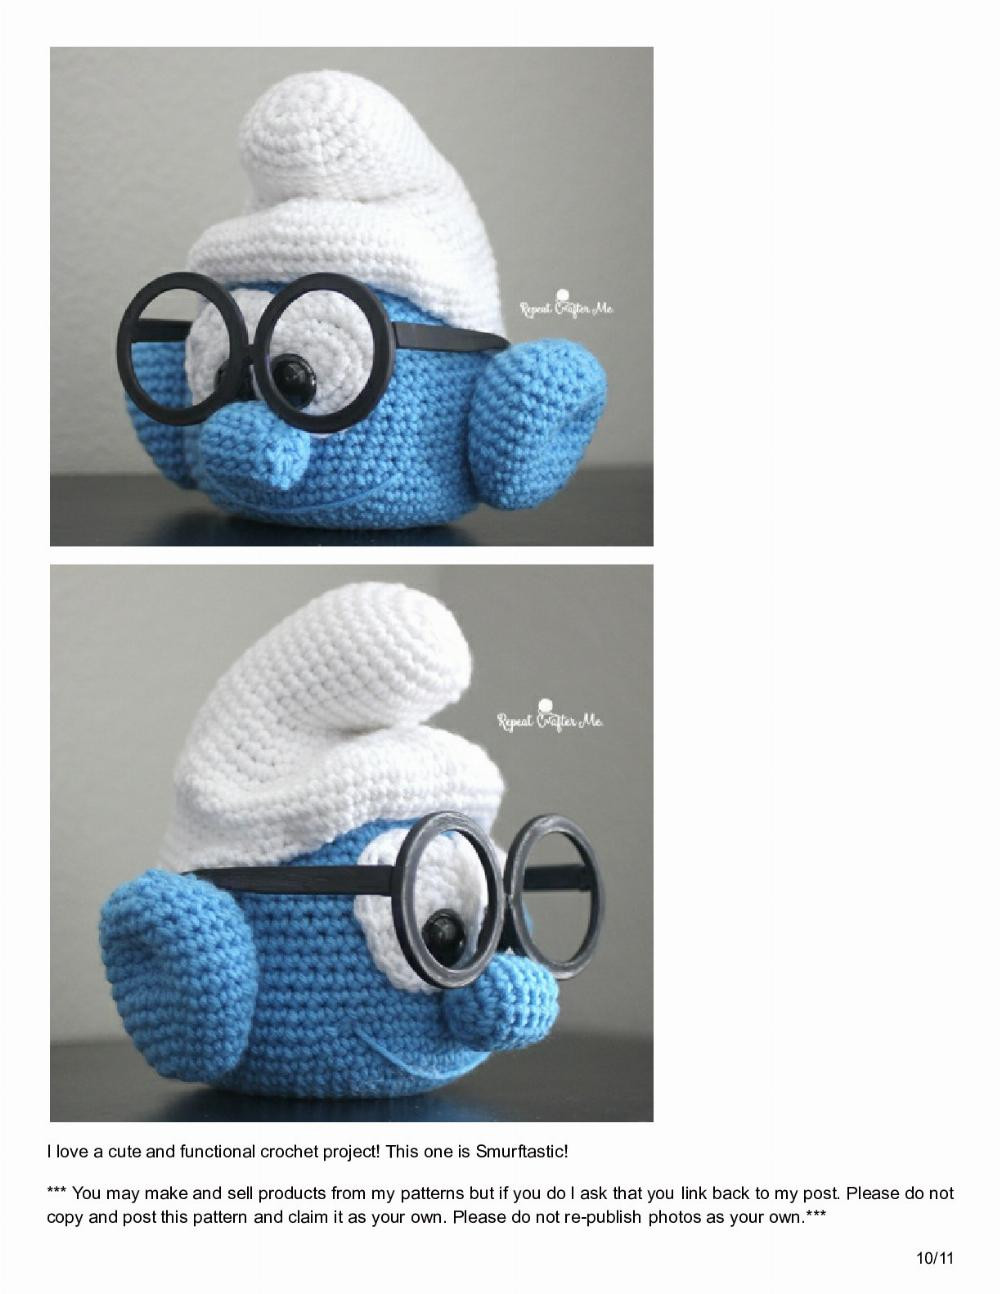 Crochet brainy smurf glasses holder (free amigurumi pattern)